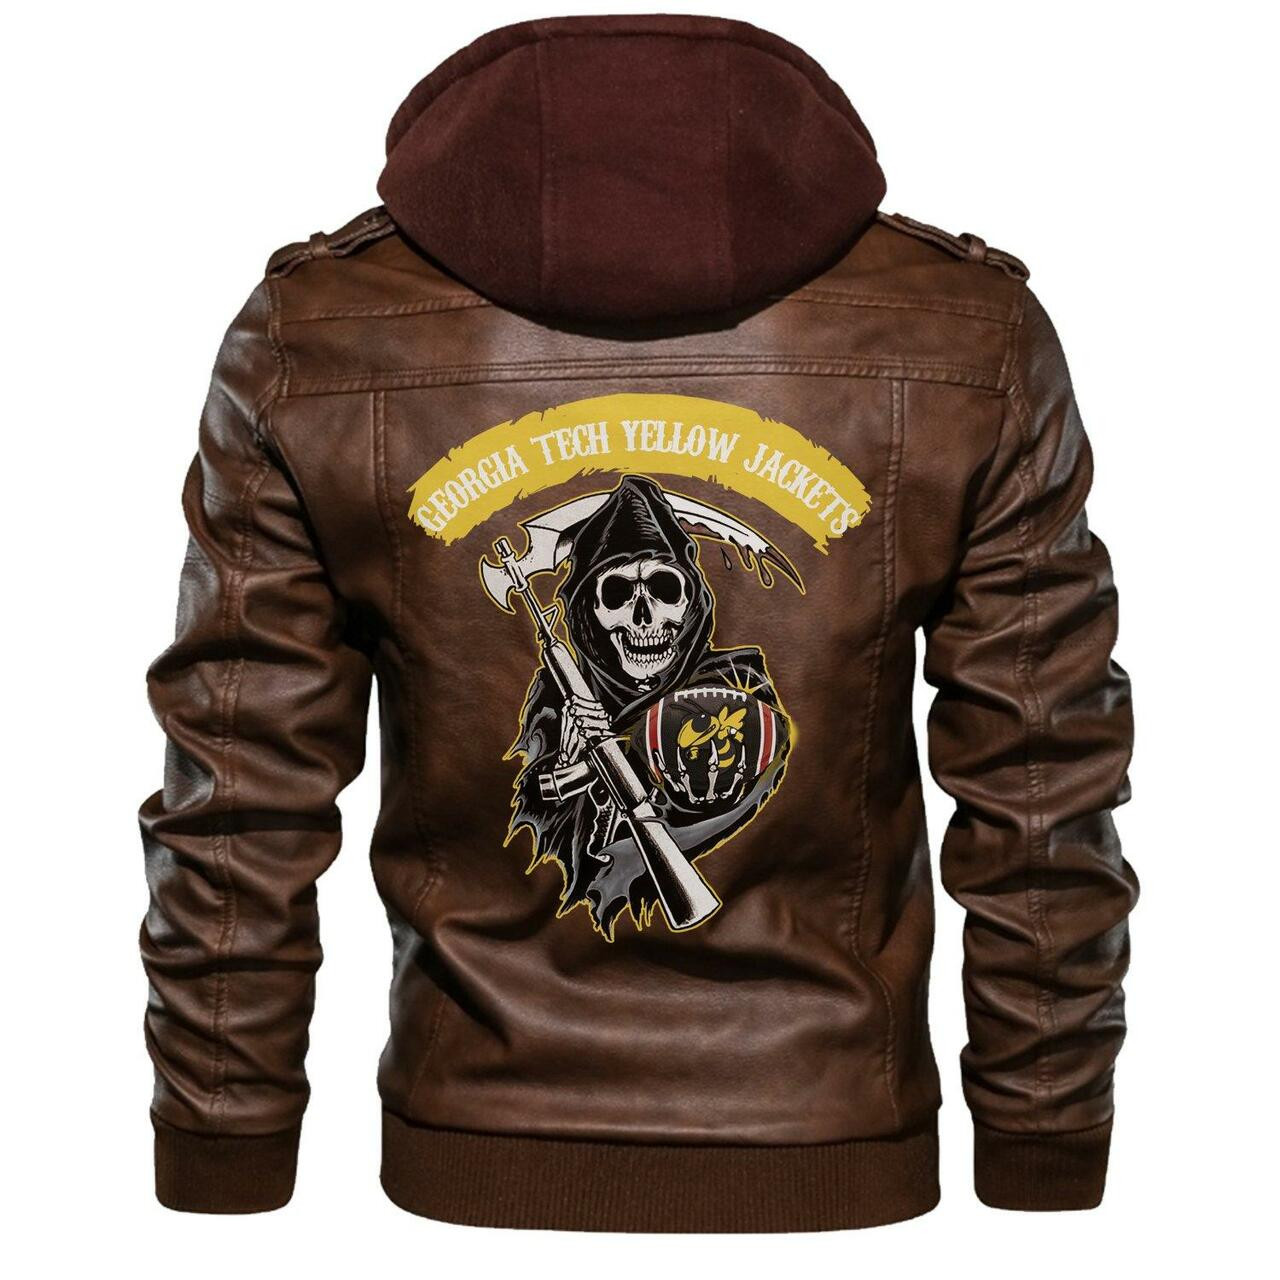 Top leather jacket Sells Best on Techcomshop 38